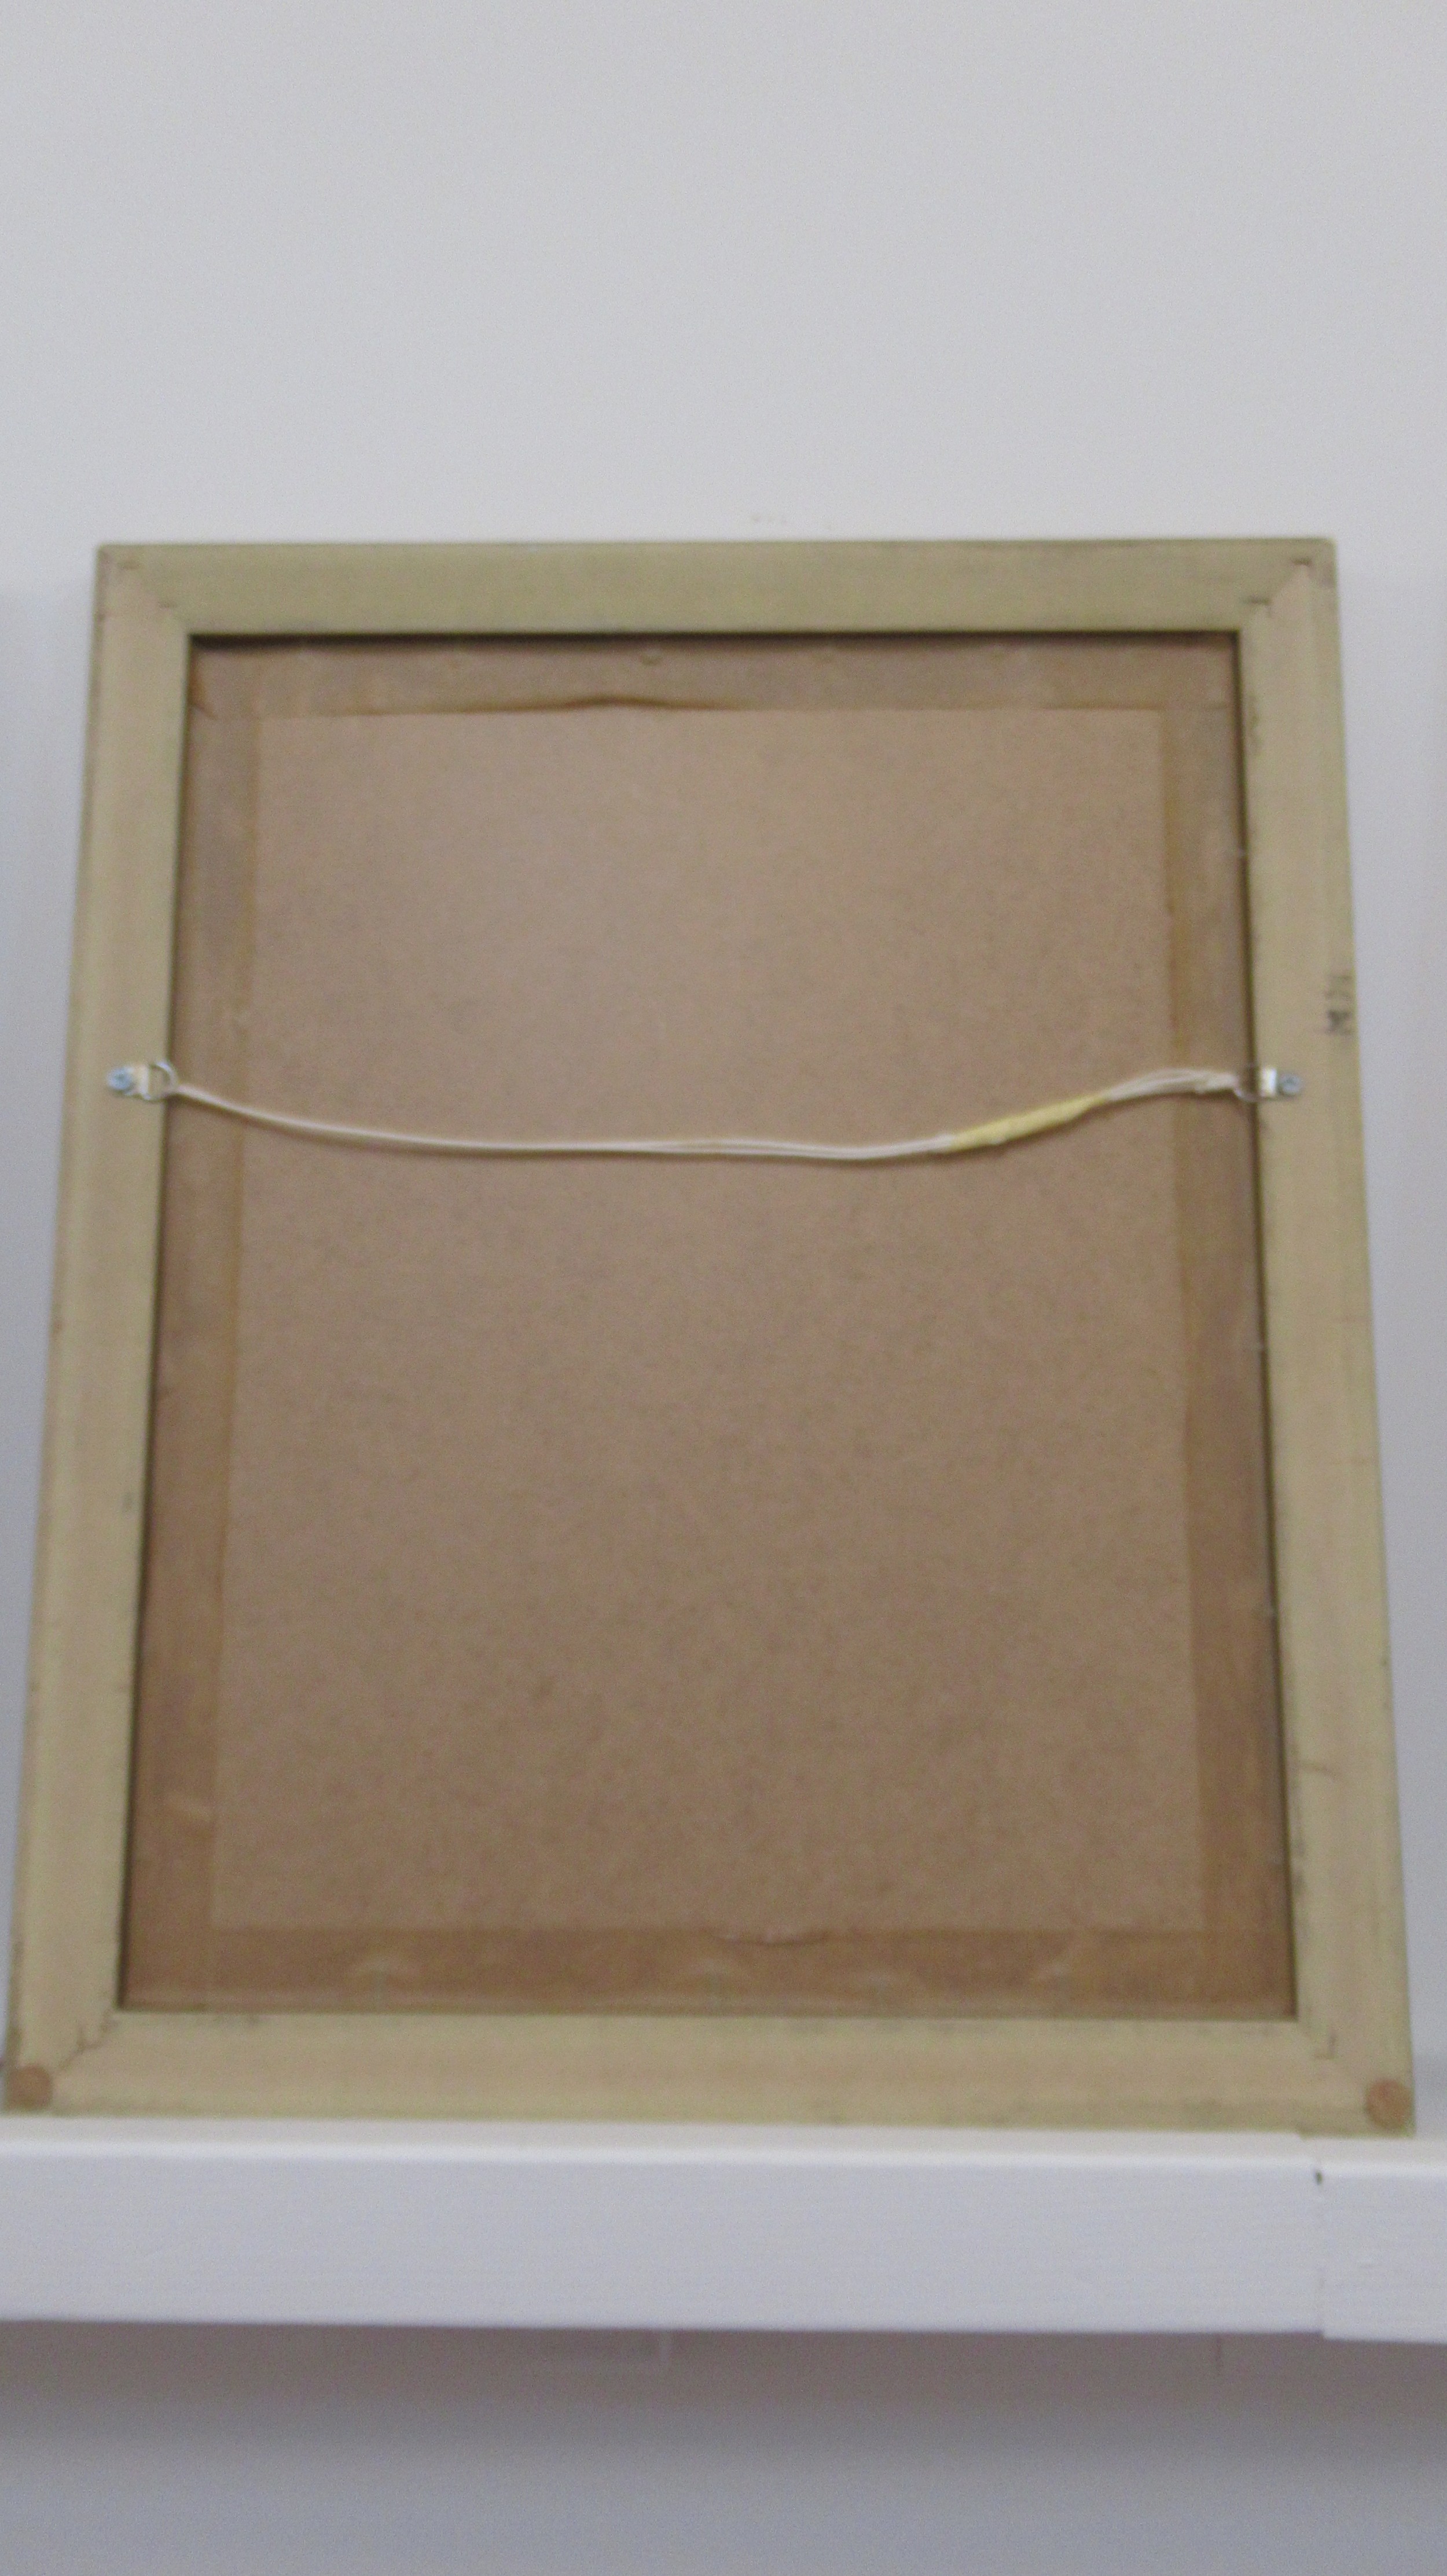 A Salvador Dali print - The Avaricious Purgatory #20 - 24cm x 18cm - in a gilt frame - Image 2 of 2